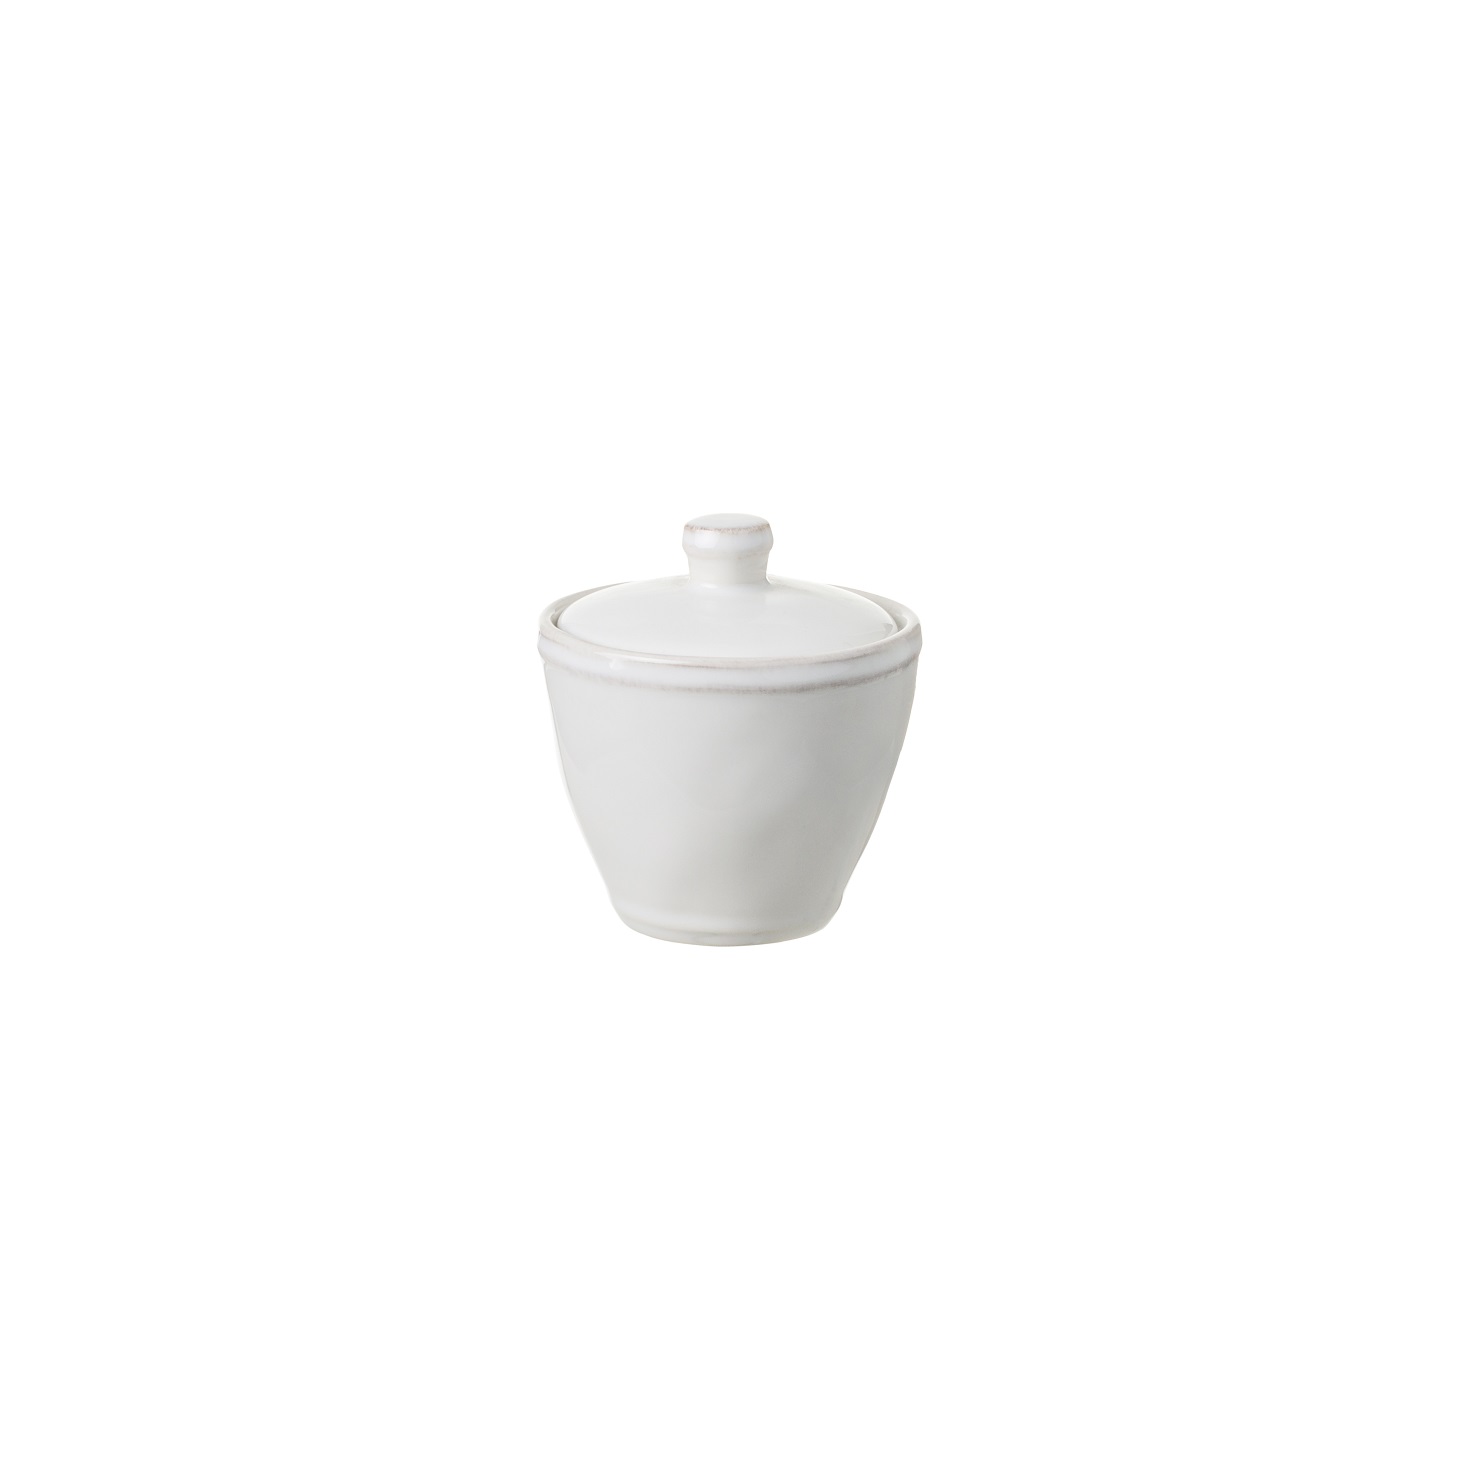 Fontana White Sugar Bowl 10cm 0.24l Gift